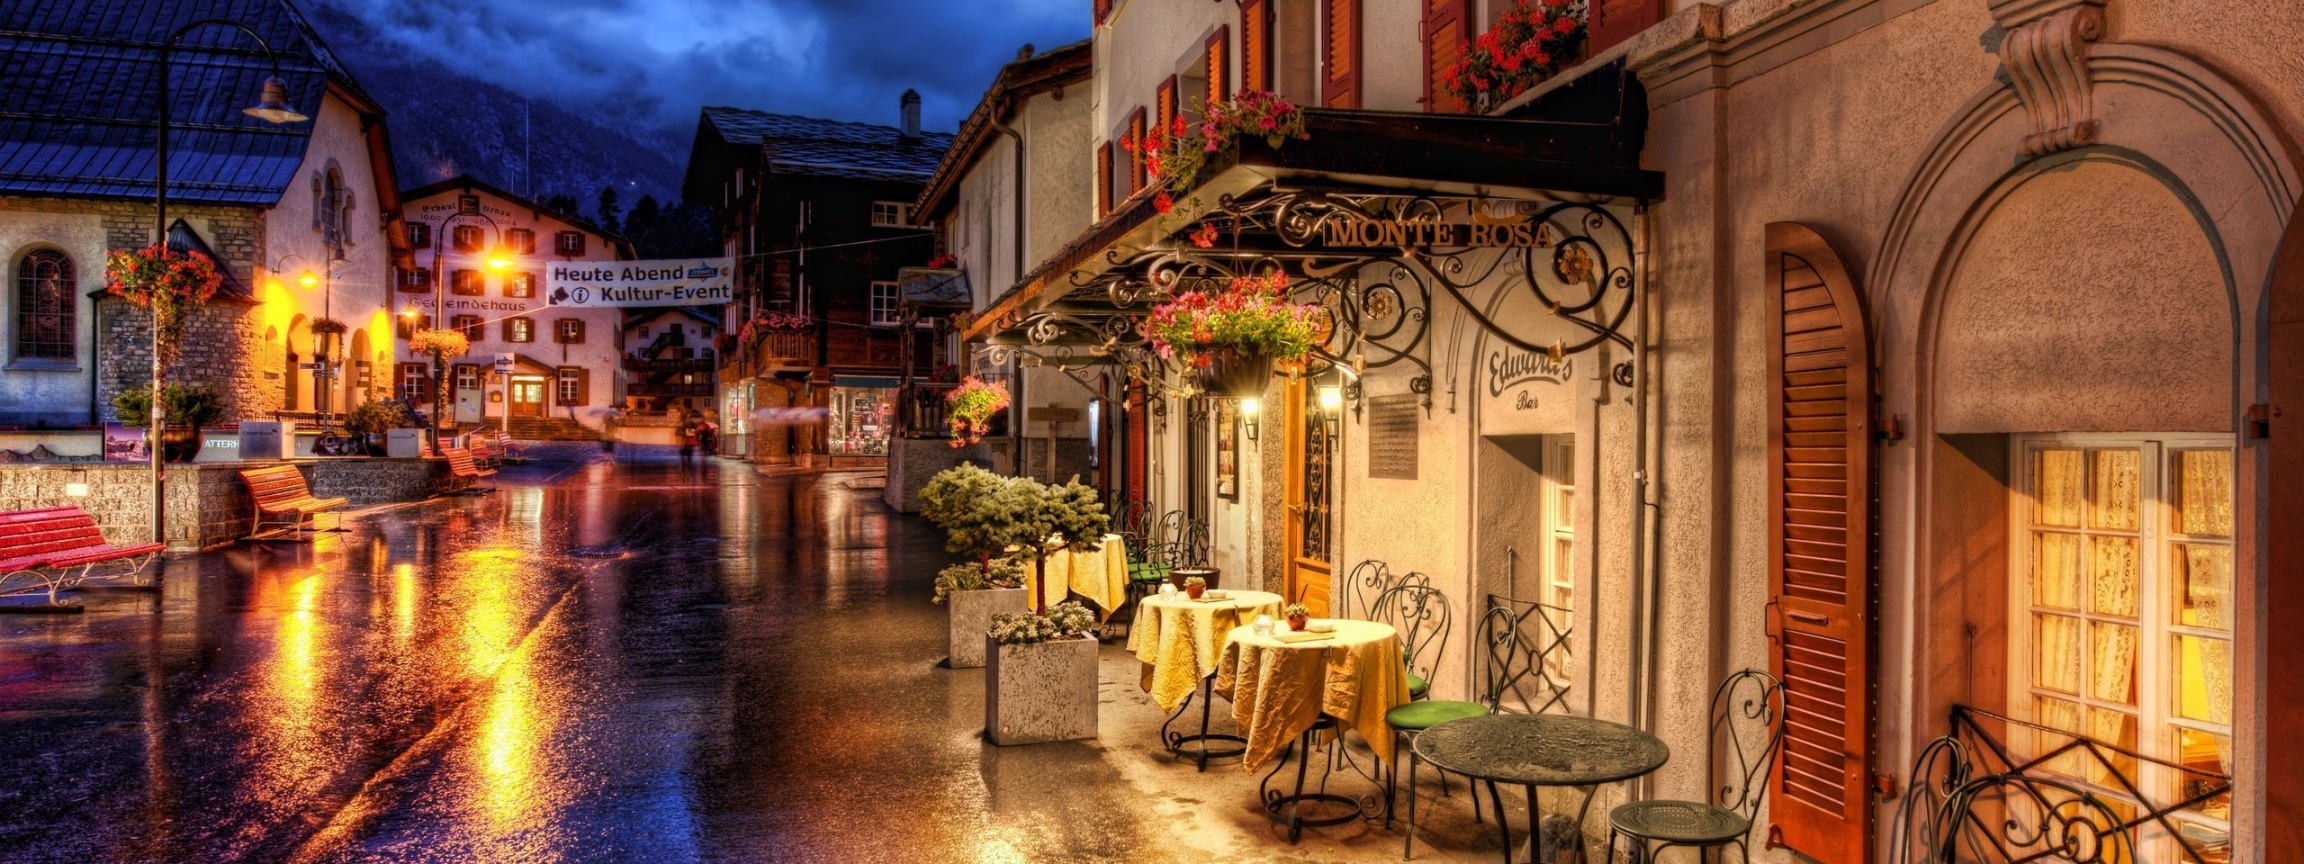 Cafes Coffee Tables Streets Zermatt Switzerland Roads Buildings Houses City